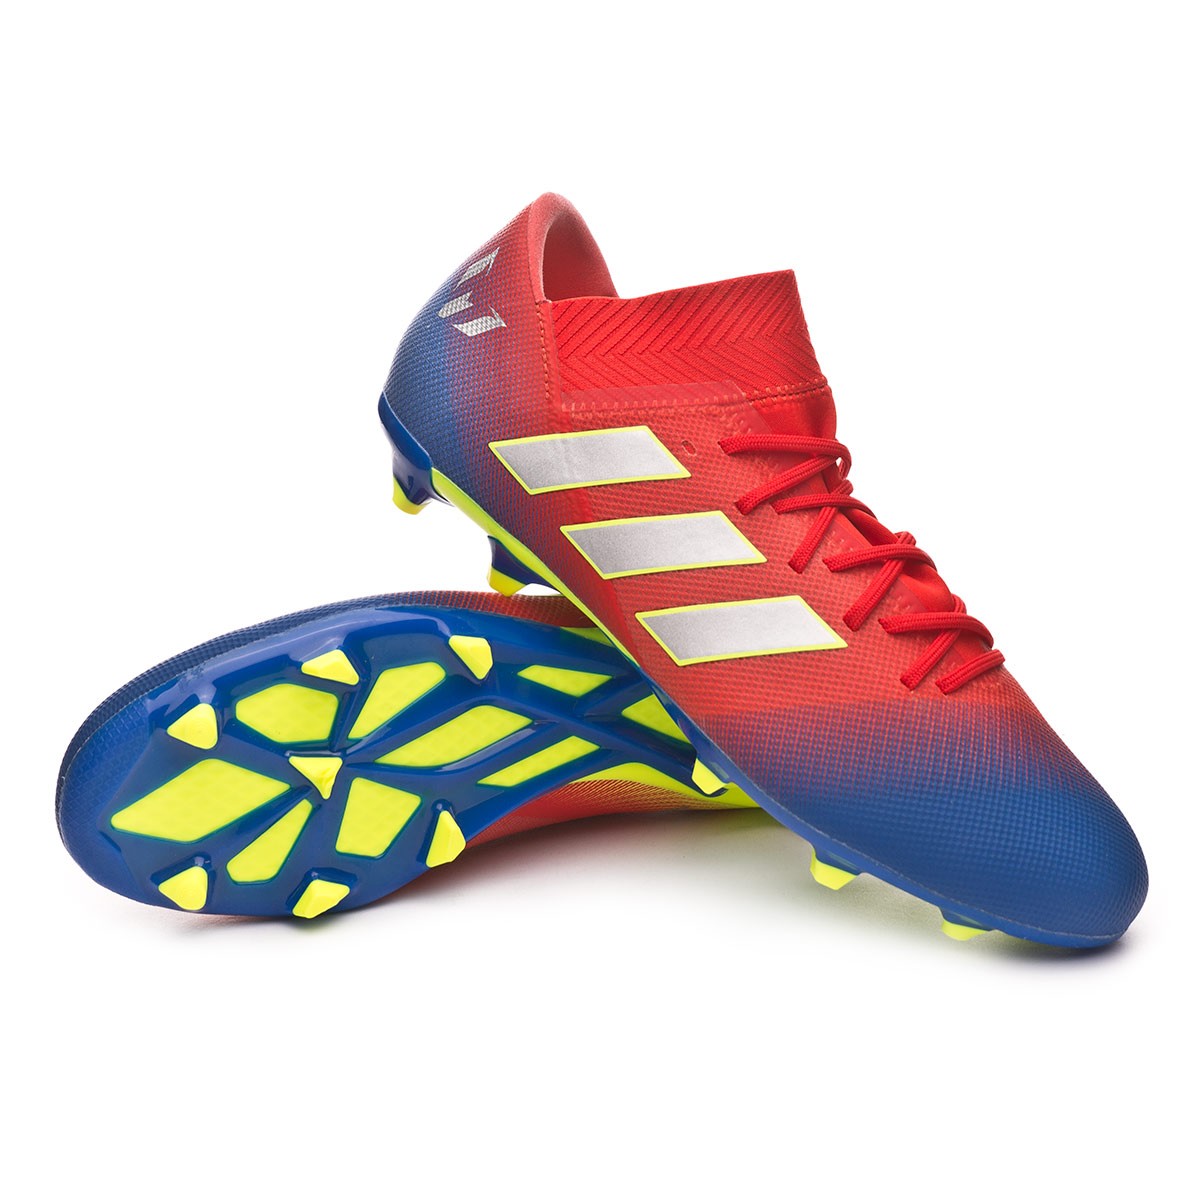 Football Boots adidas Nemeziz Messi 18.3 FG Active red-Silver  metallic-Football blue - Football store Fútbol Emotion